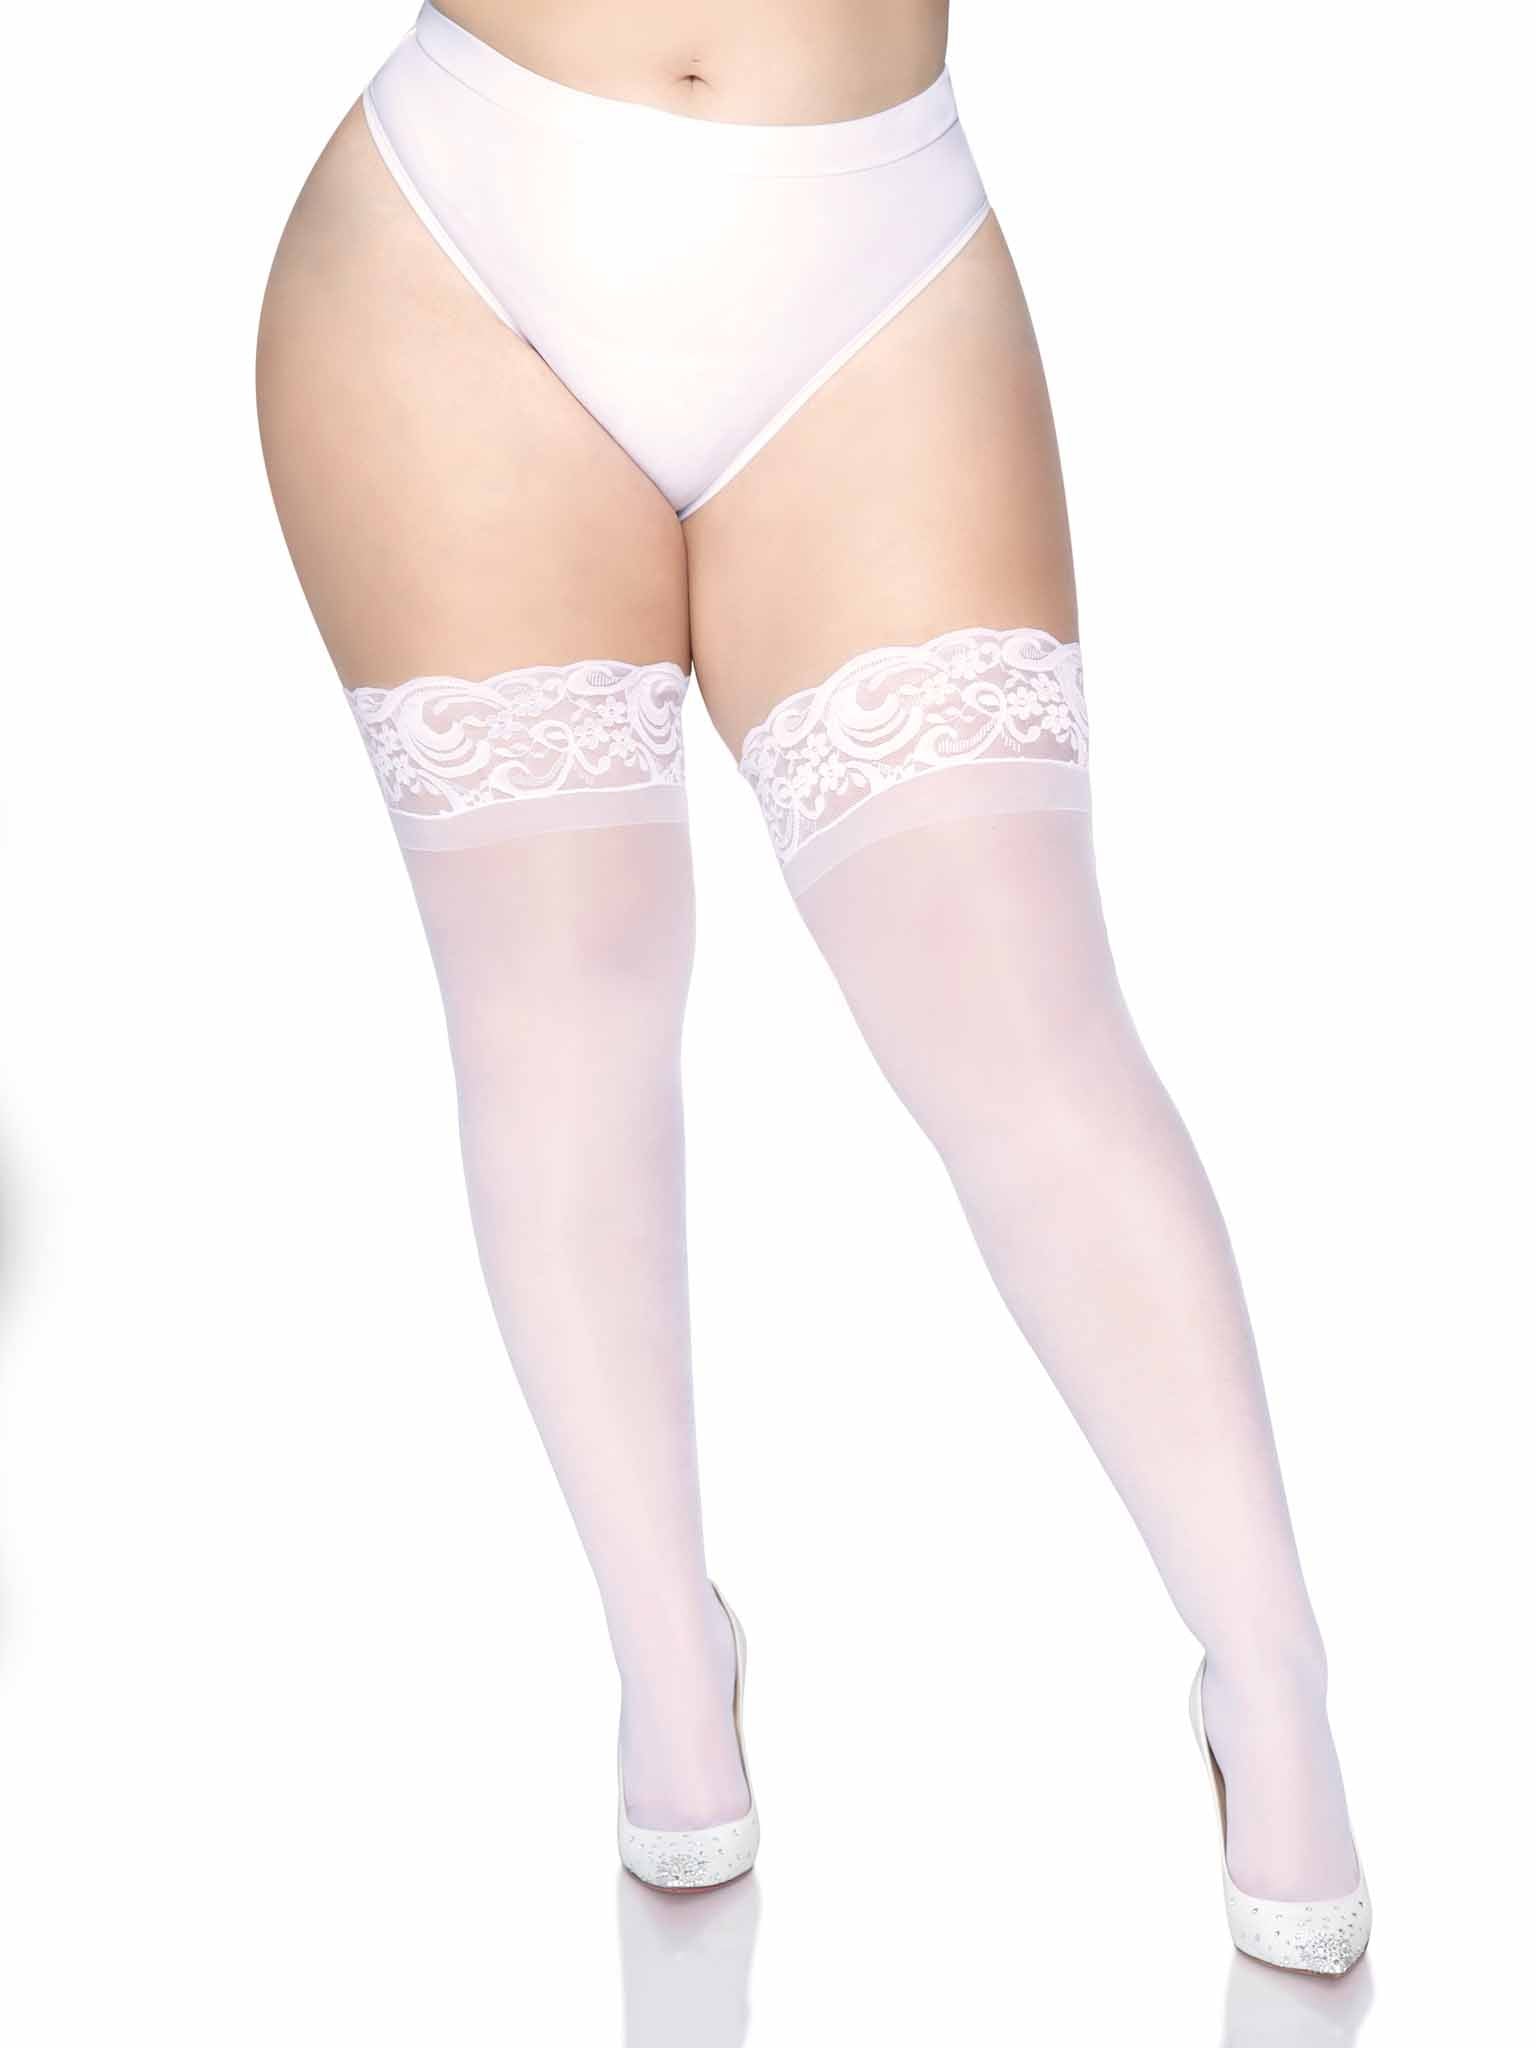 Plus Size Opaque White Thigh High Women's Stockings